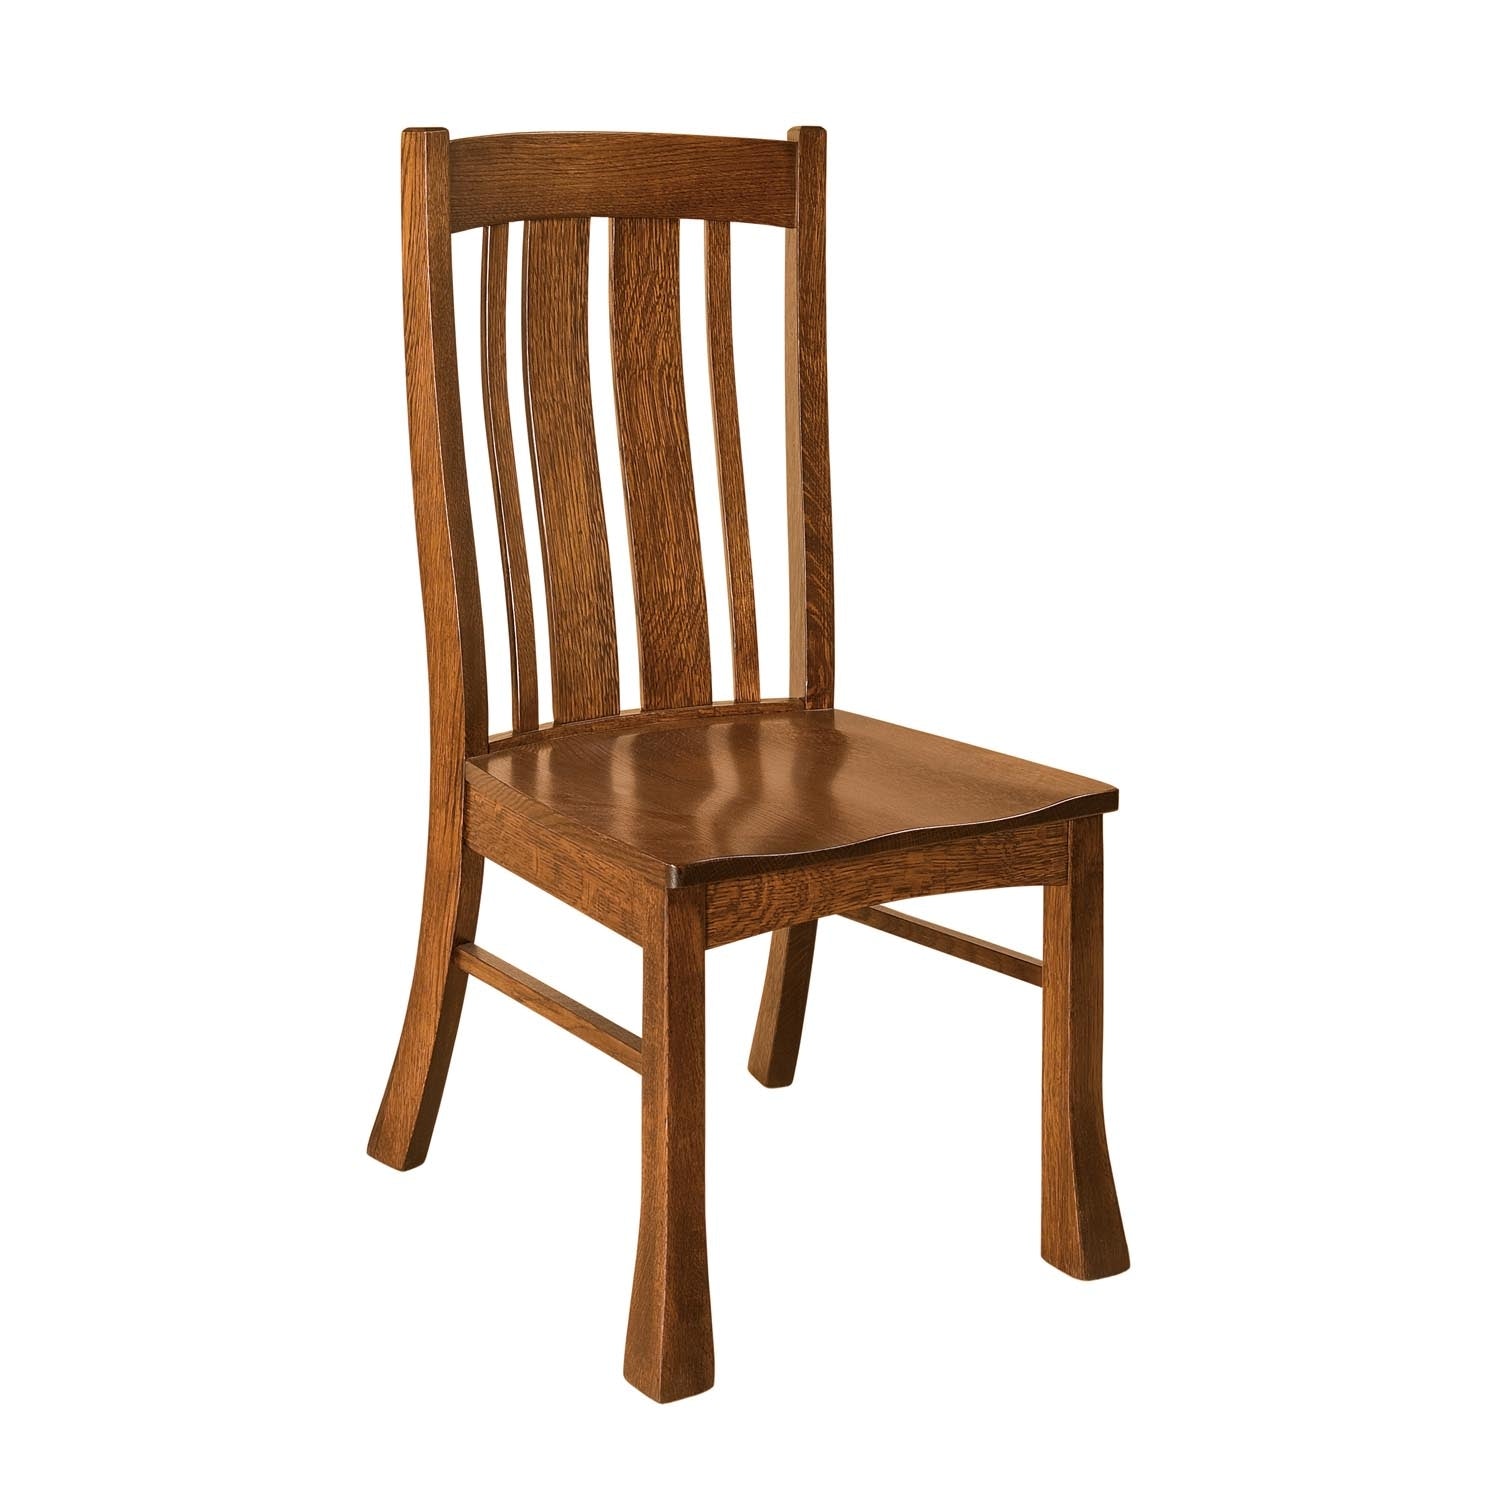 Breckenridge Chair - snyders.furniture